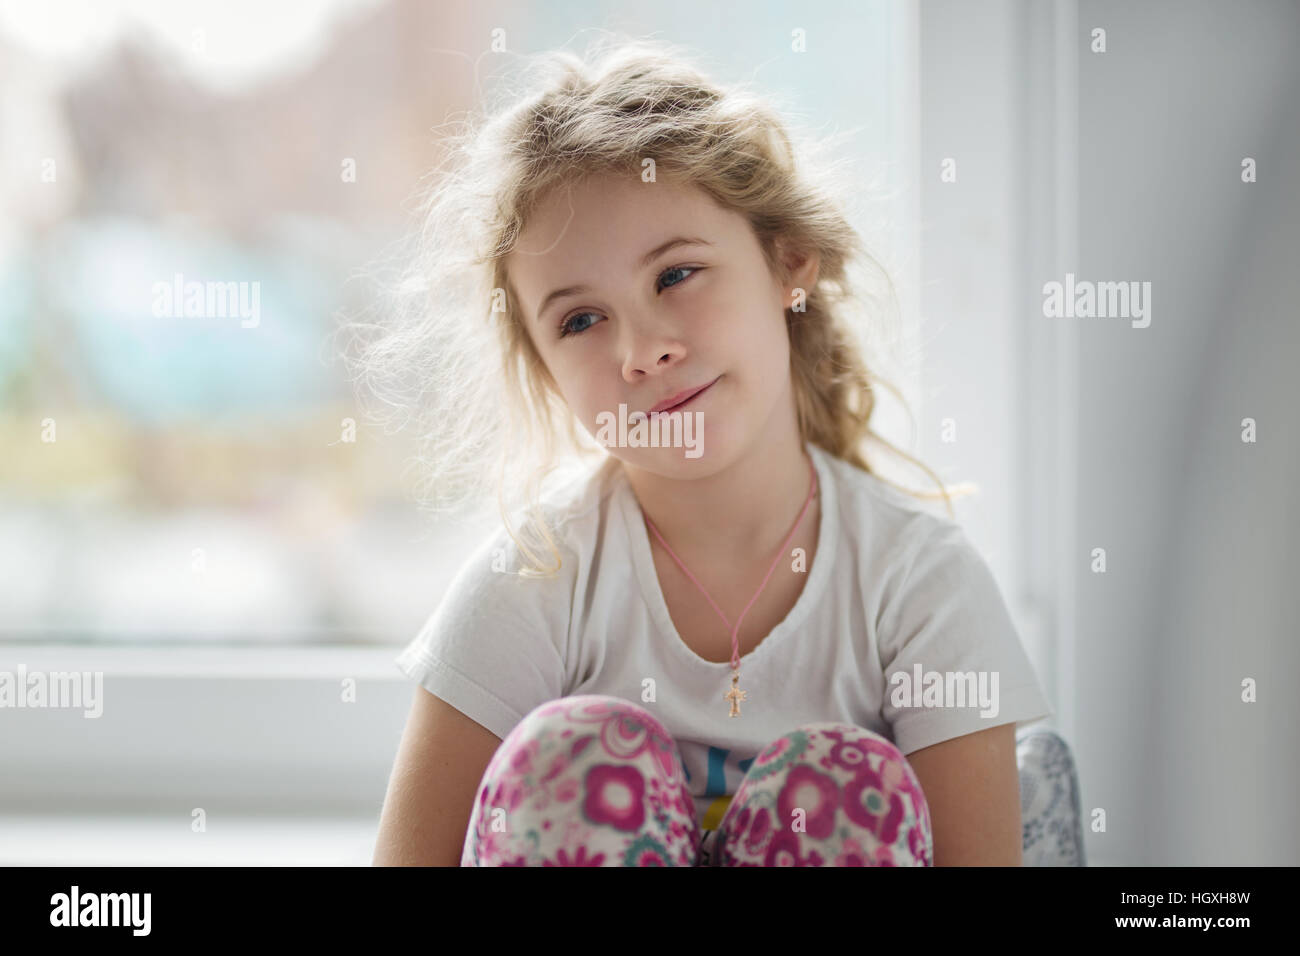 Portrait Of Cute Blonde Child Girl Sitting Near Window Stock Photo